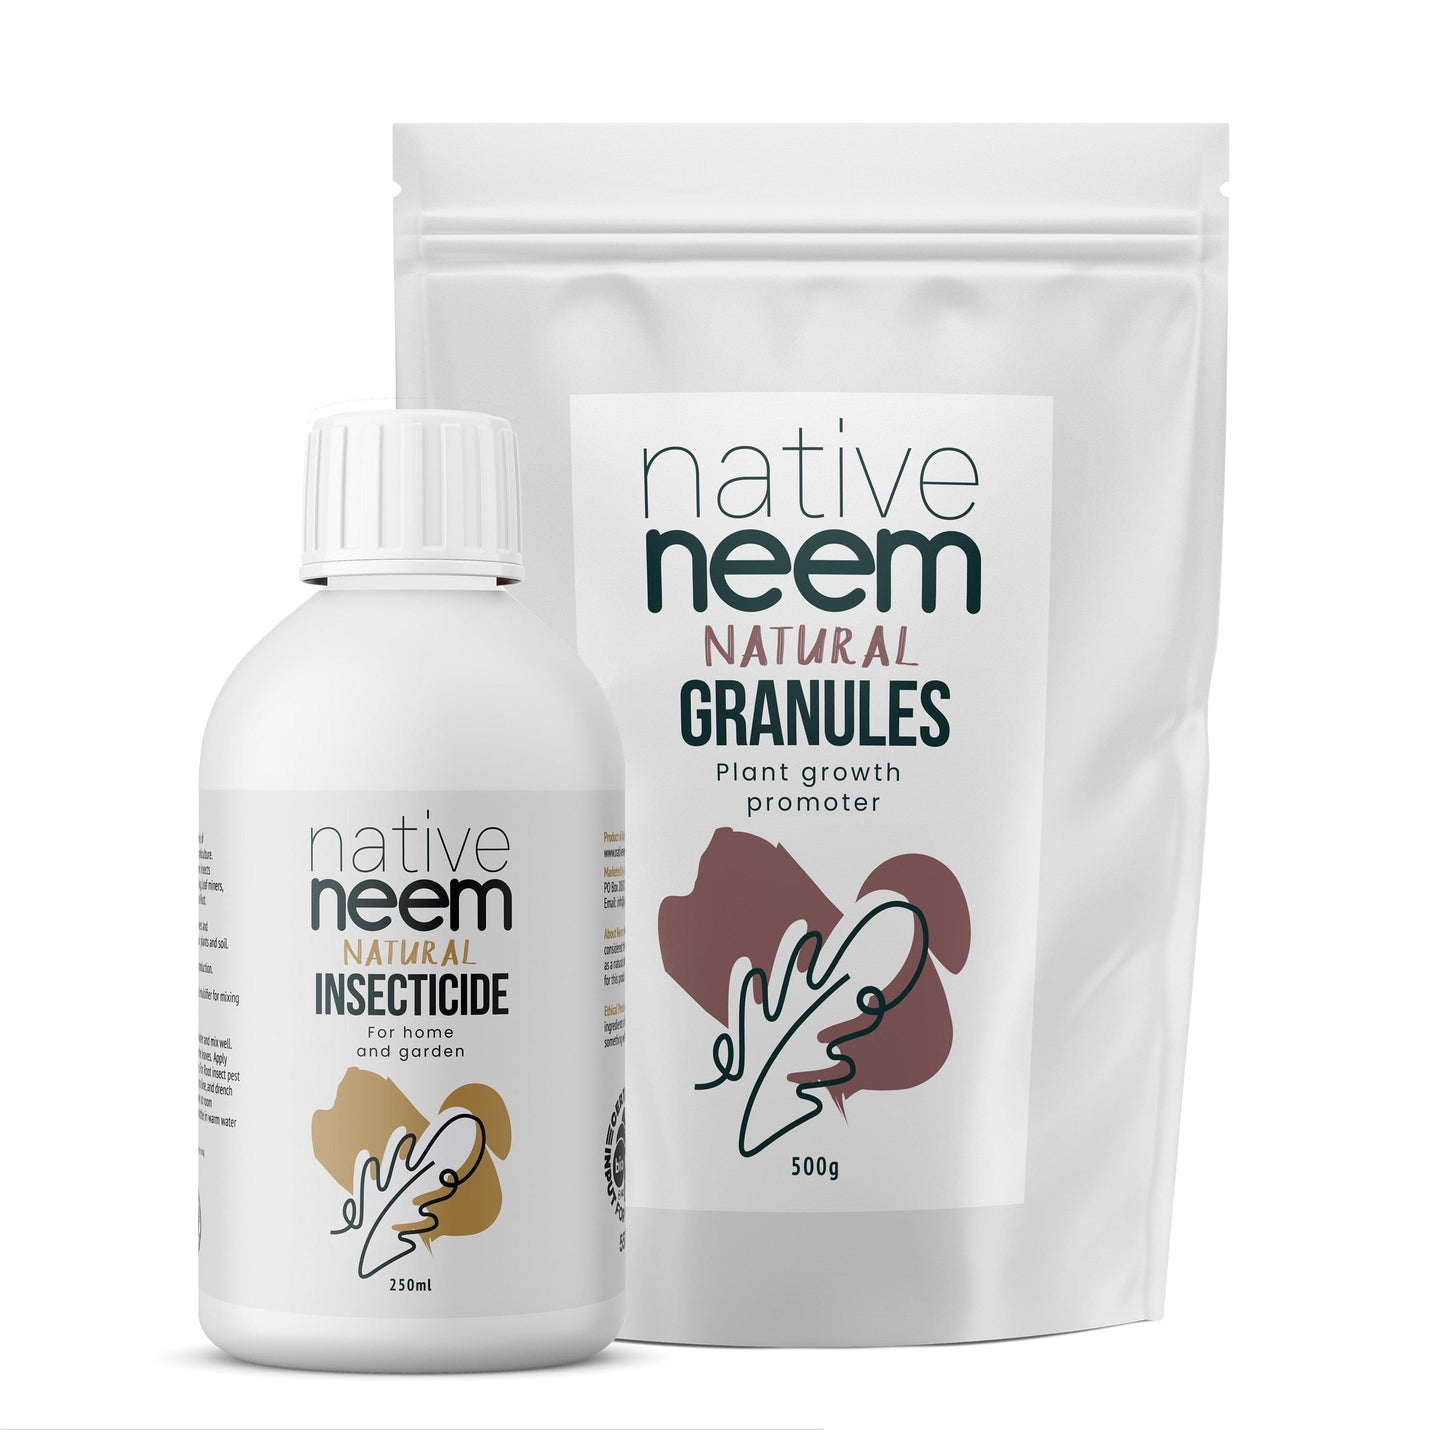 Organic Native Neem Grass Grub Pack - NativeNeem